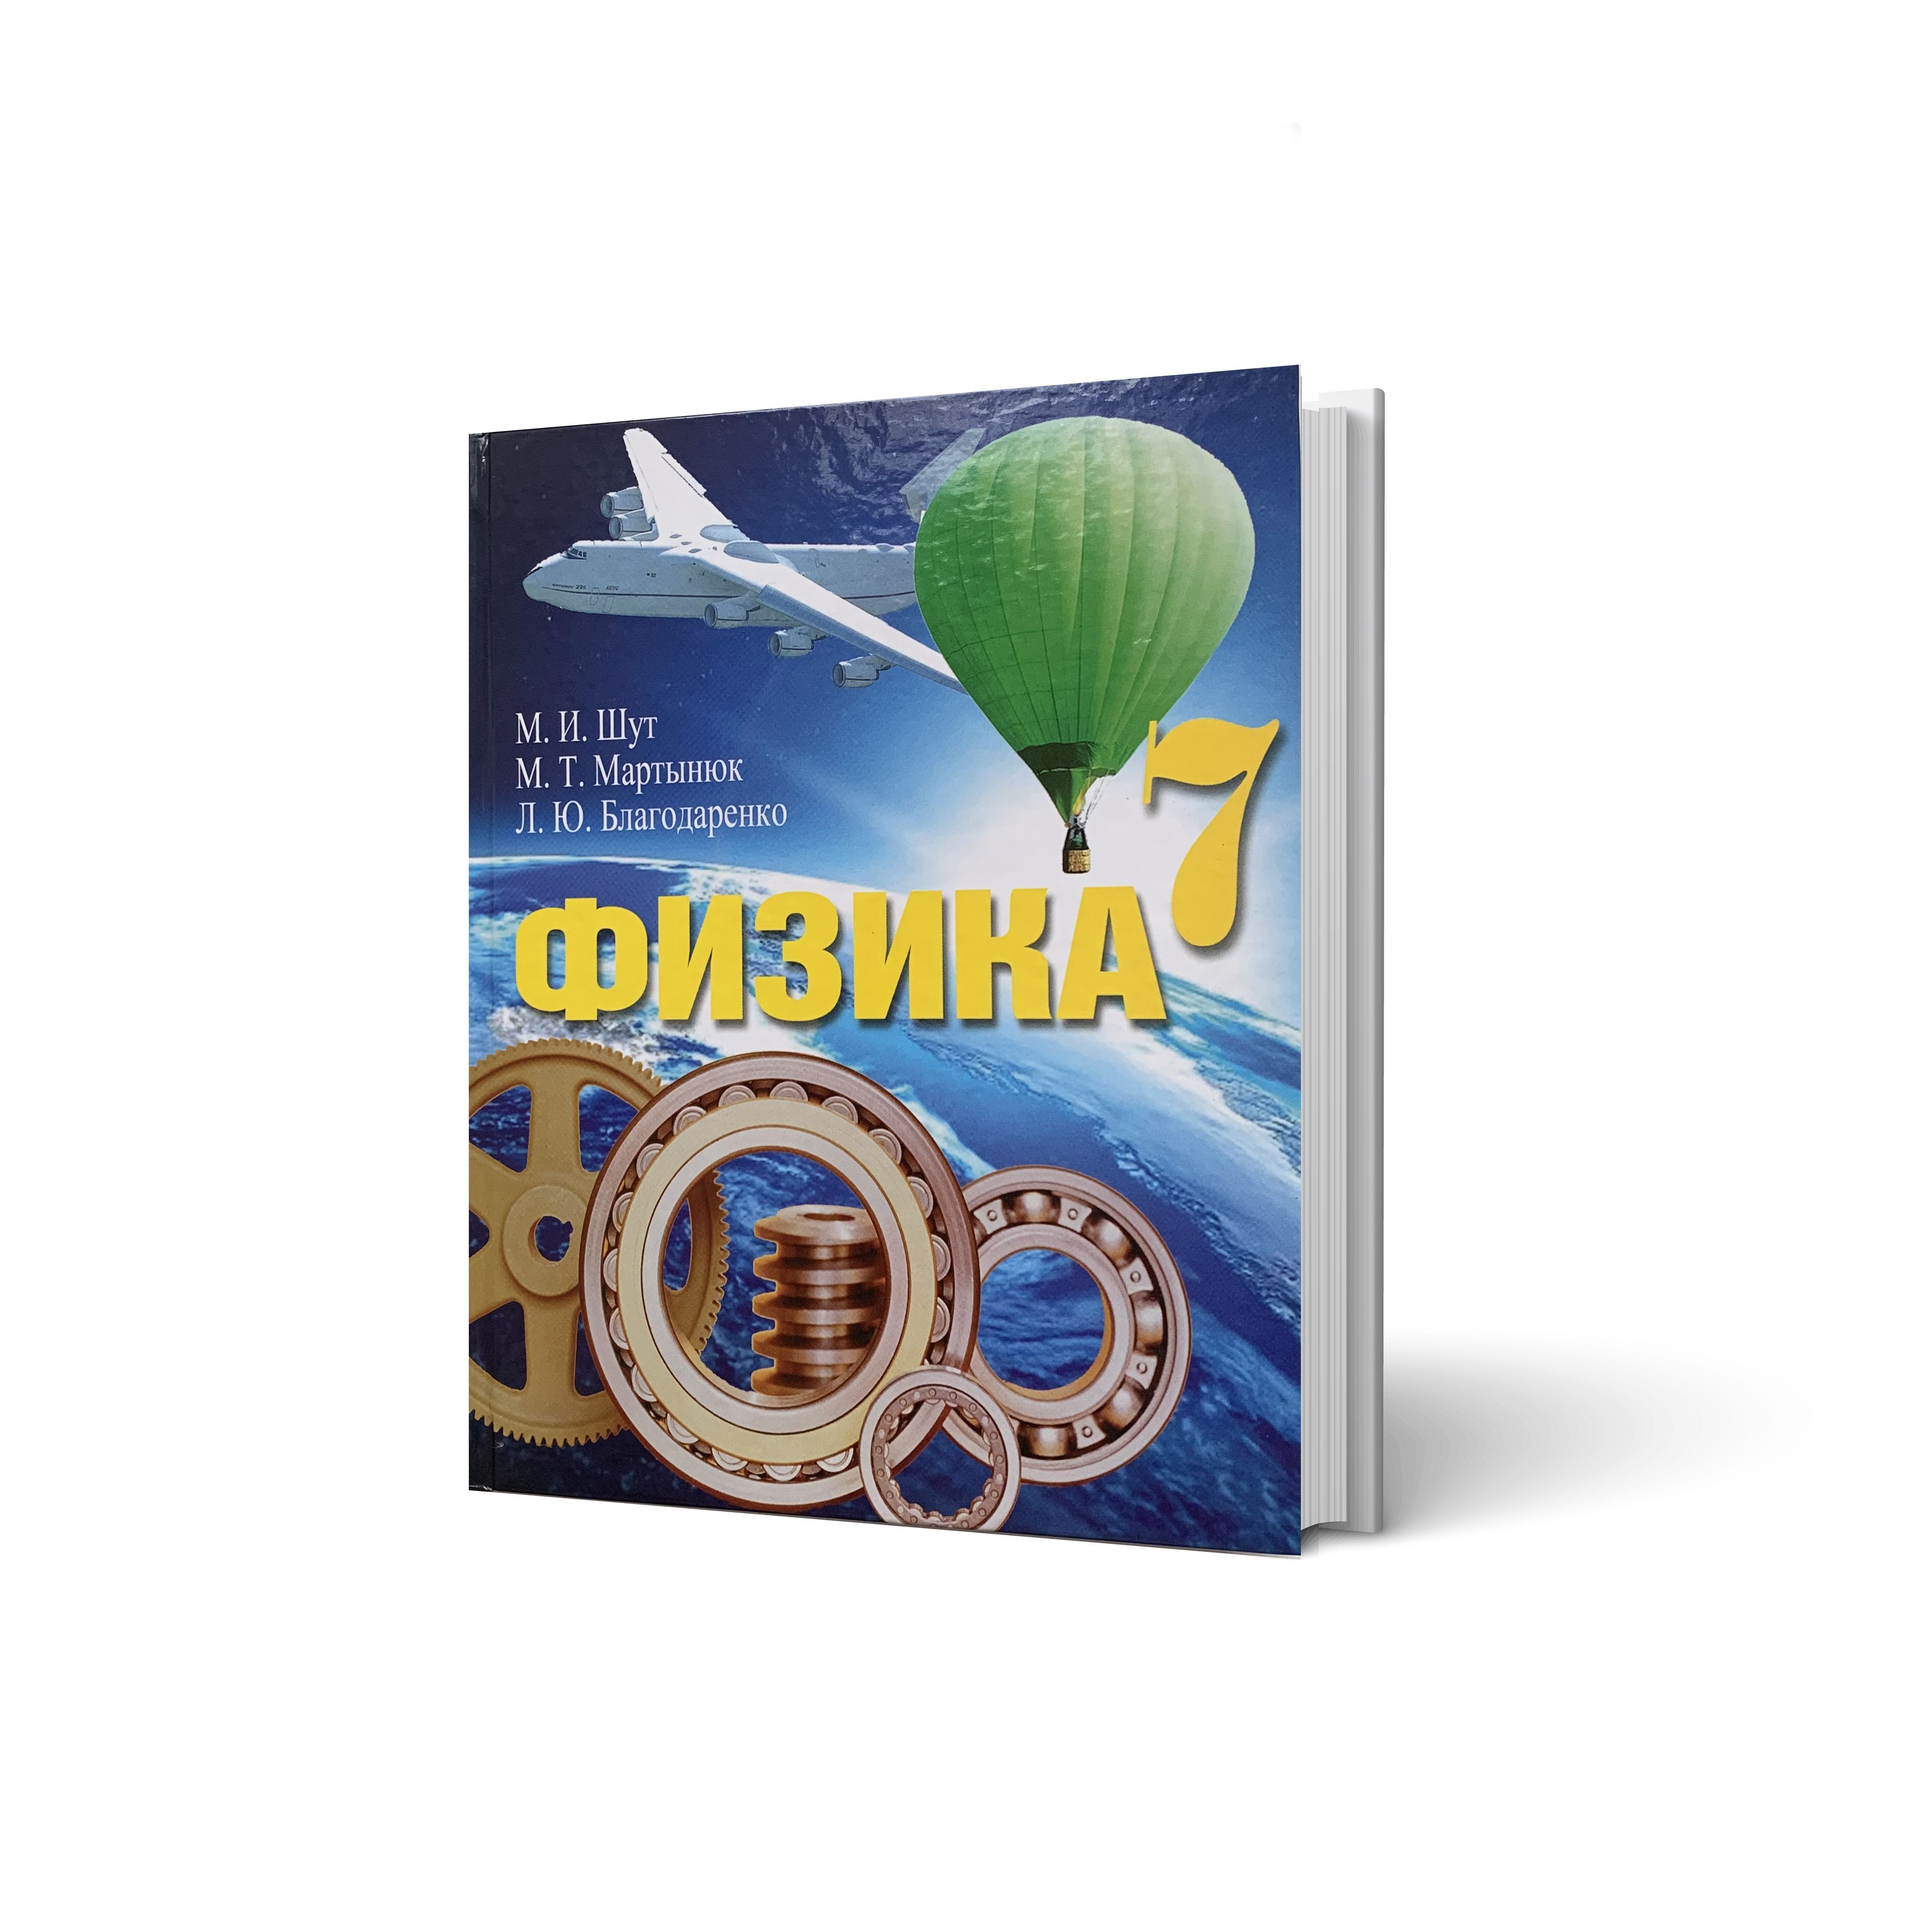 купить Физика 7 класс 213035875 Учебники Книги Офис, школа, rozetka.com.ua ...